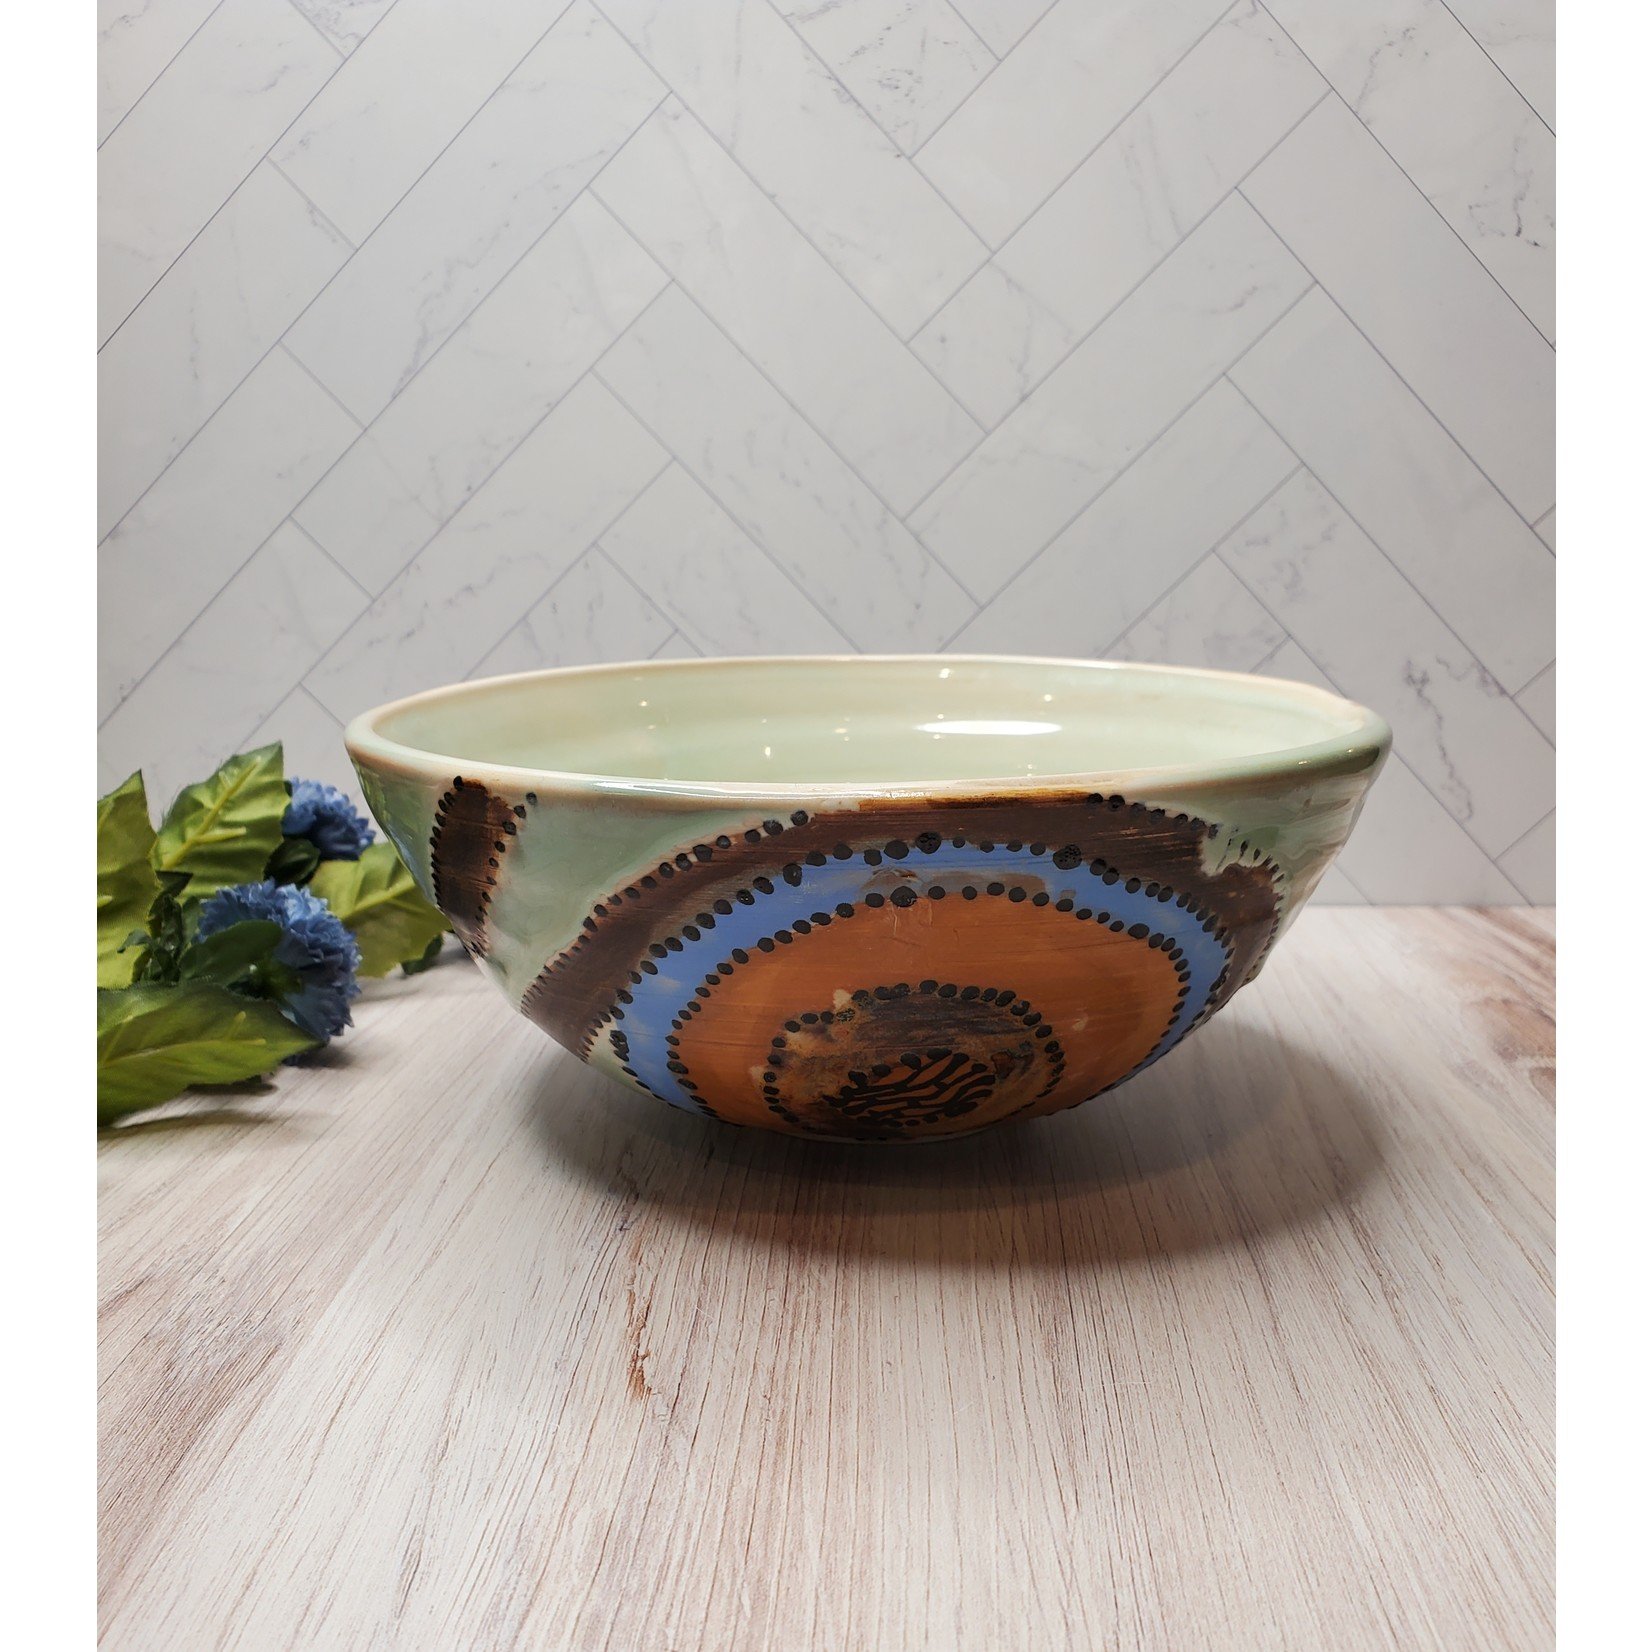 Pottio Studery Aboriginal Designs - Porcelain Bowl - Medium